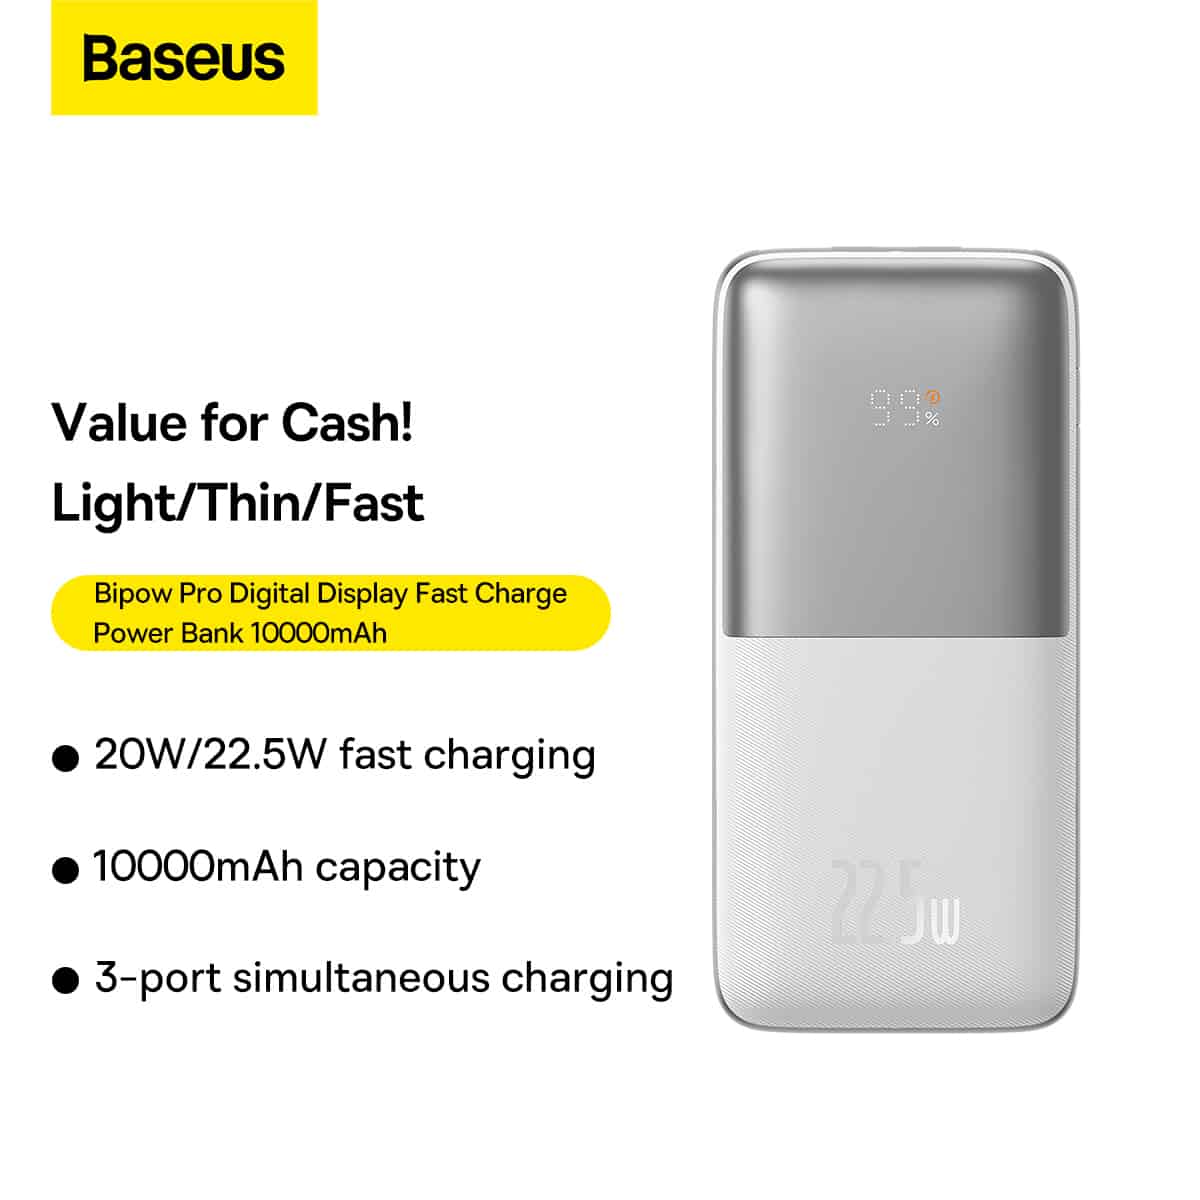 Baseus Bipow Pro 10000mAh 22.5mAh Digital Display Fast Charge Power Bank 3